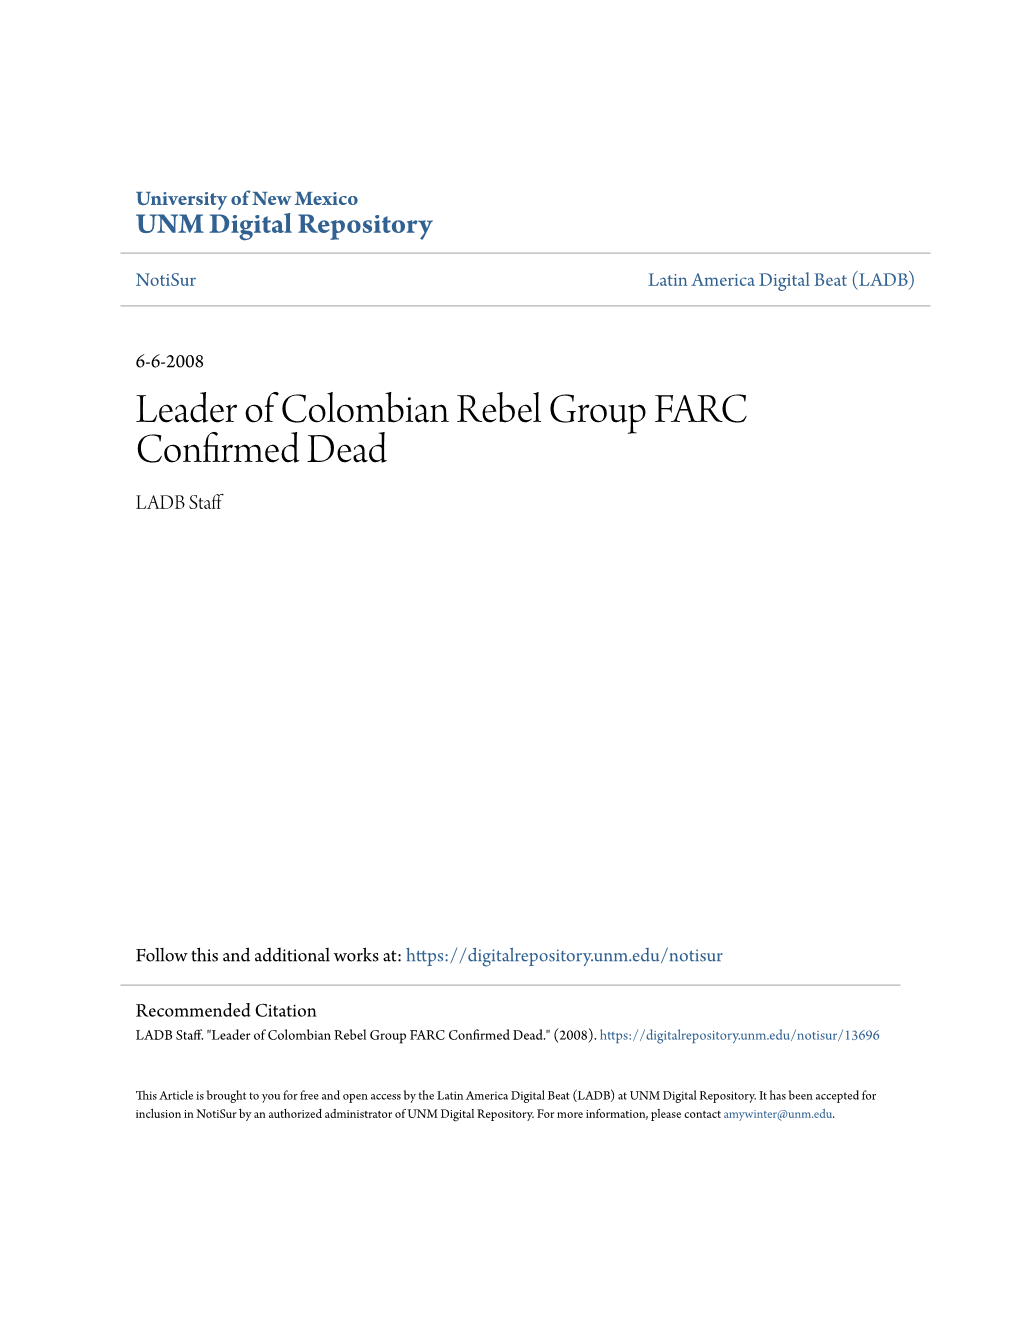 Leader of Colombian Rebel Group FARC Confirmed Dead LADB Staff